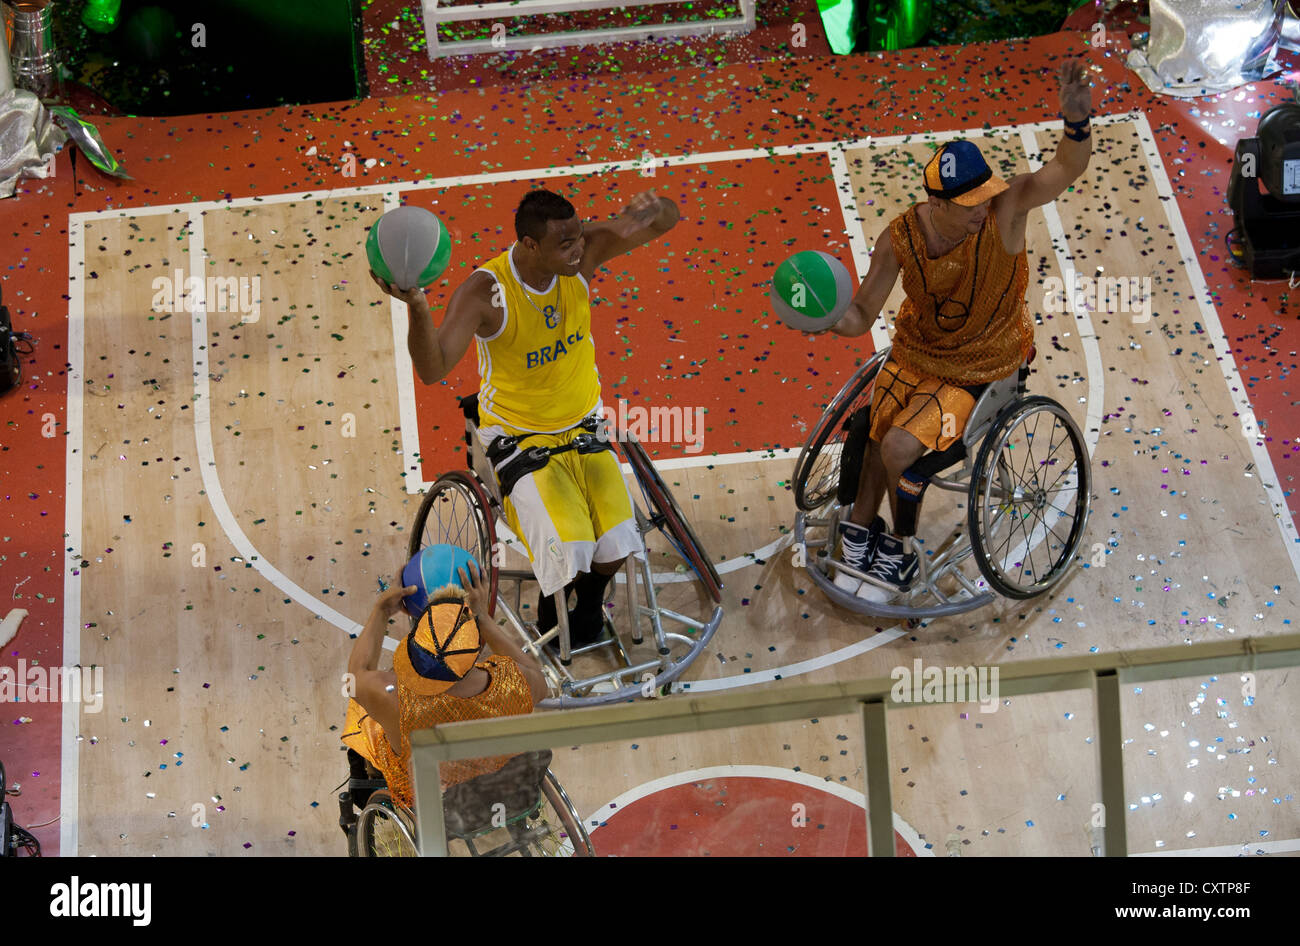 Paralympics Basketball Float Carnival Rio de Janeiro Brazil Stock Photo